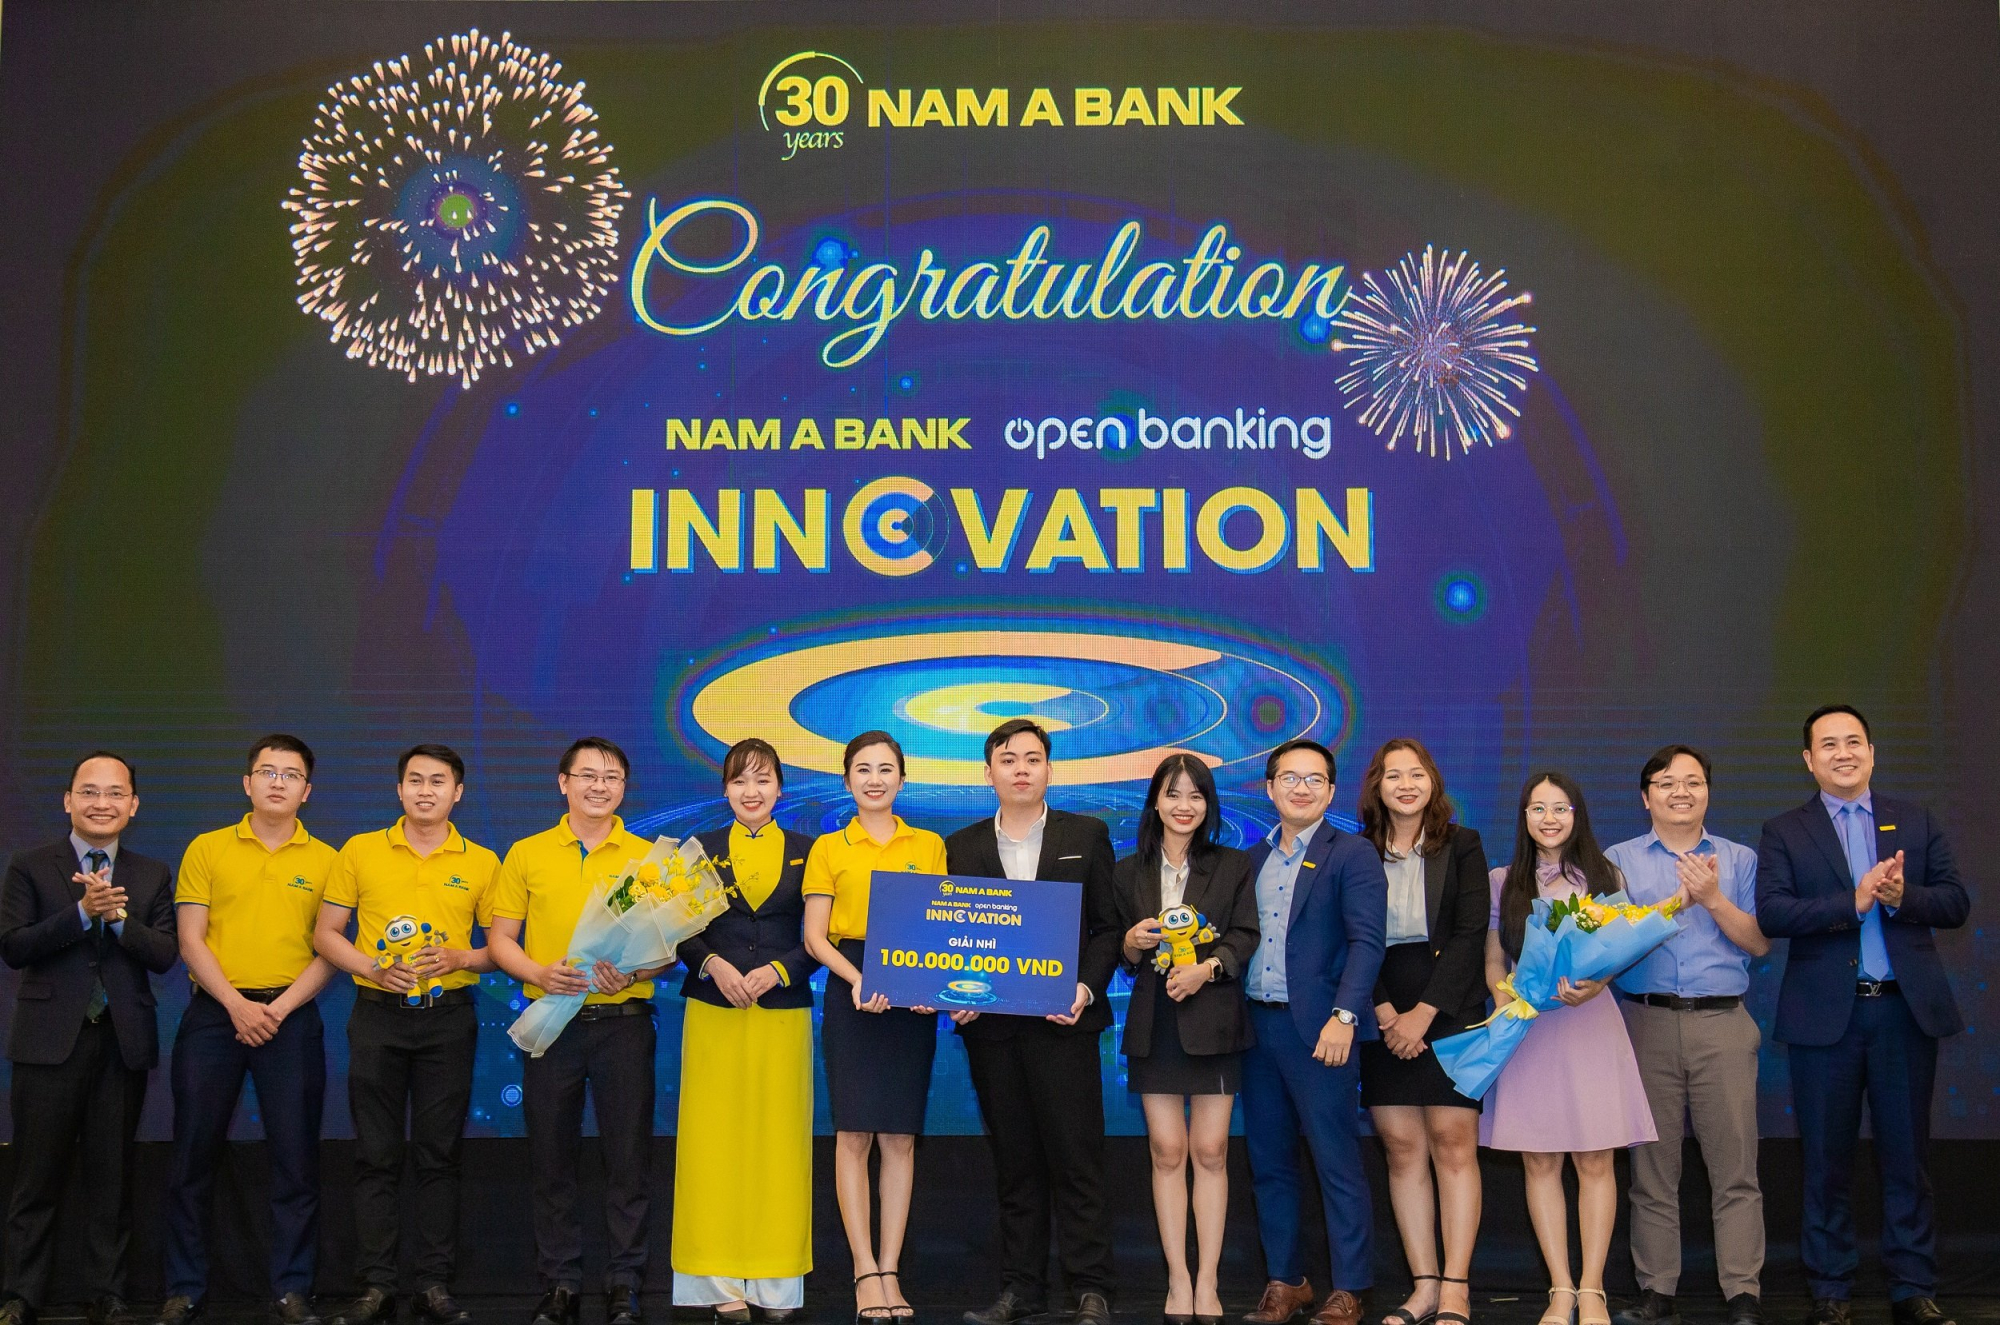 top 7 du an mang tinh ung dung cao duoc vinh danh tai cuoc thi nam a bank  openbanking innovation hinh 2